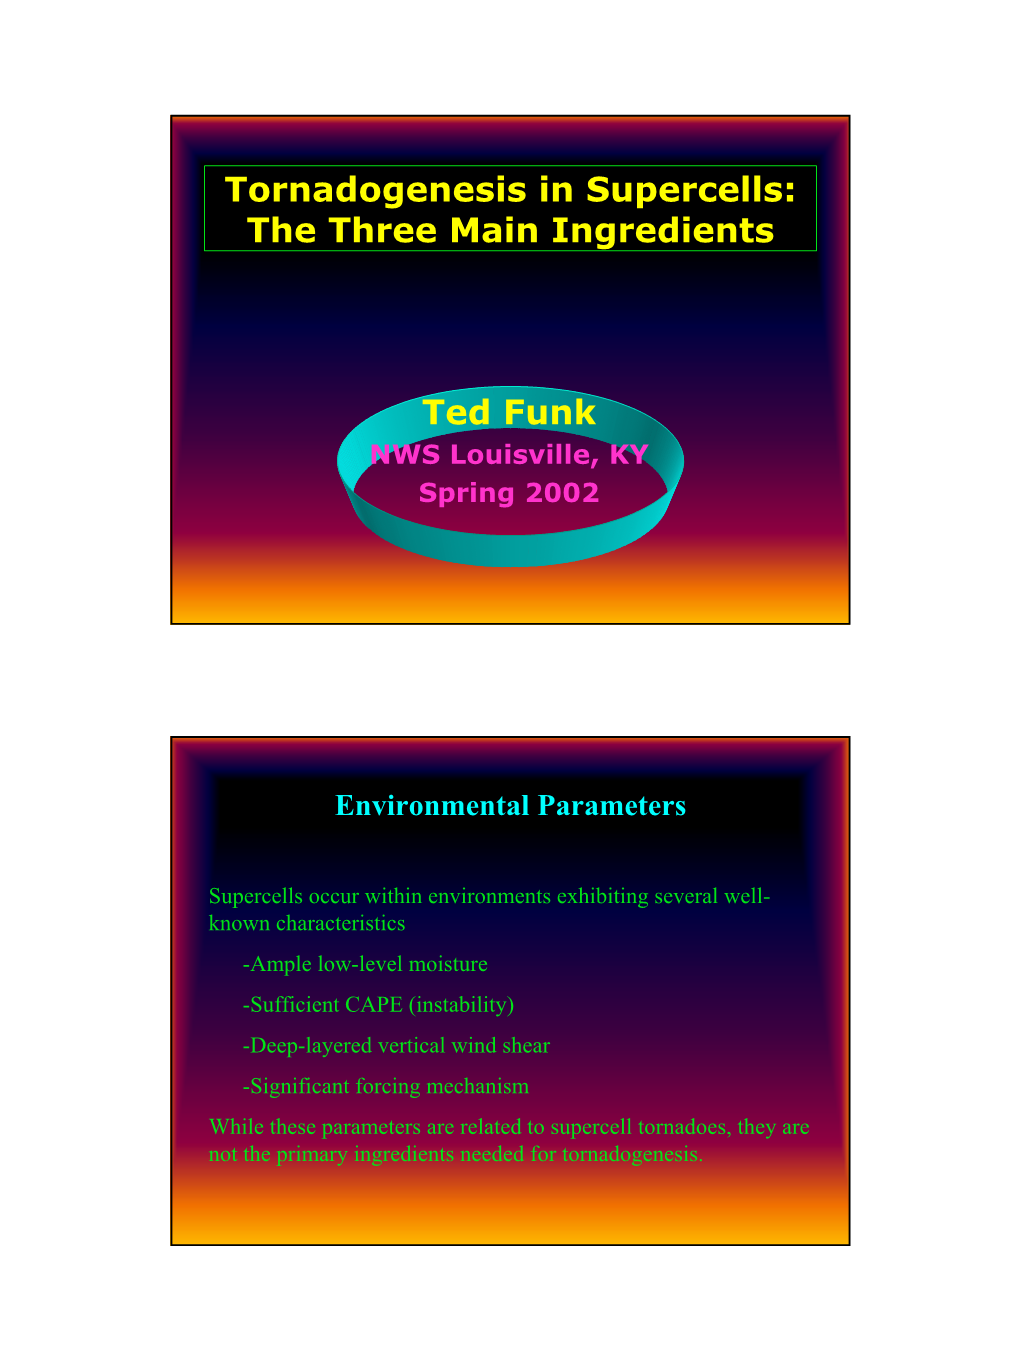 Tornadogenesis in Supercells: the Three Main Ingredients